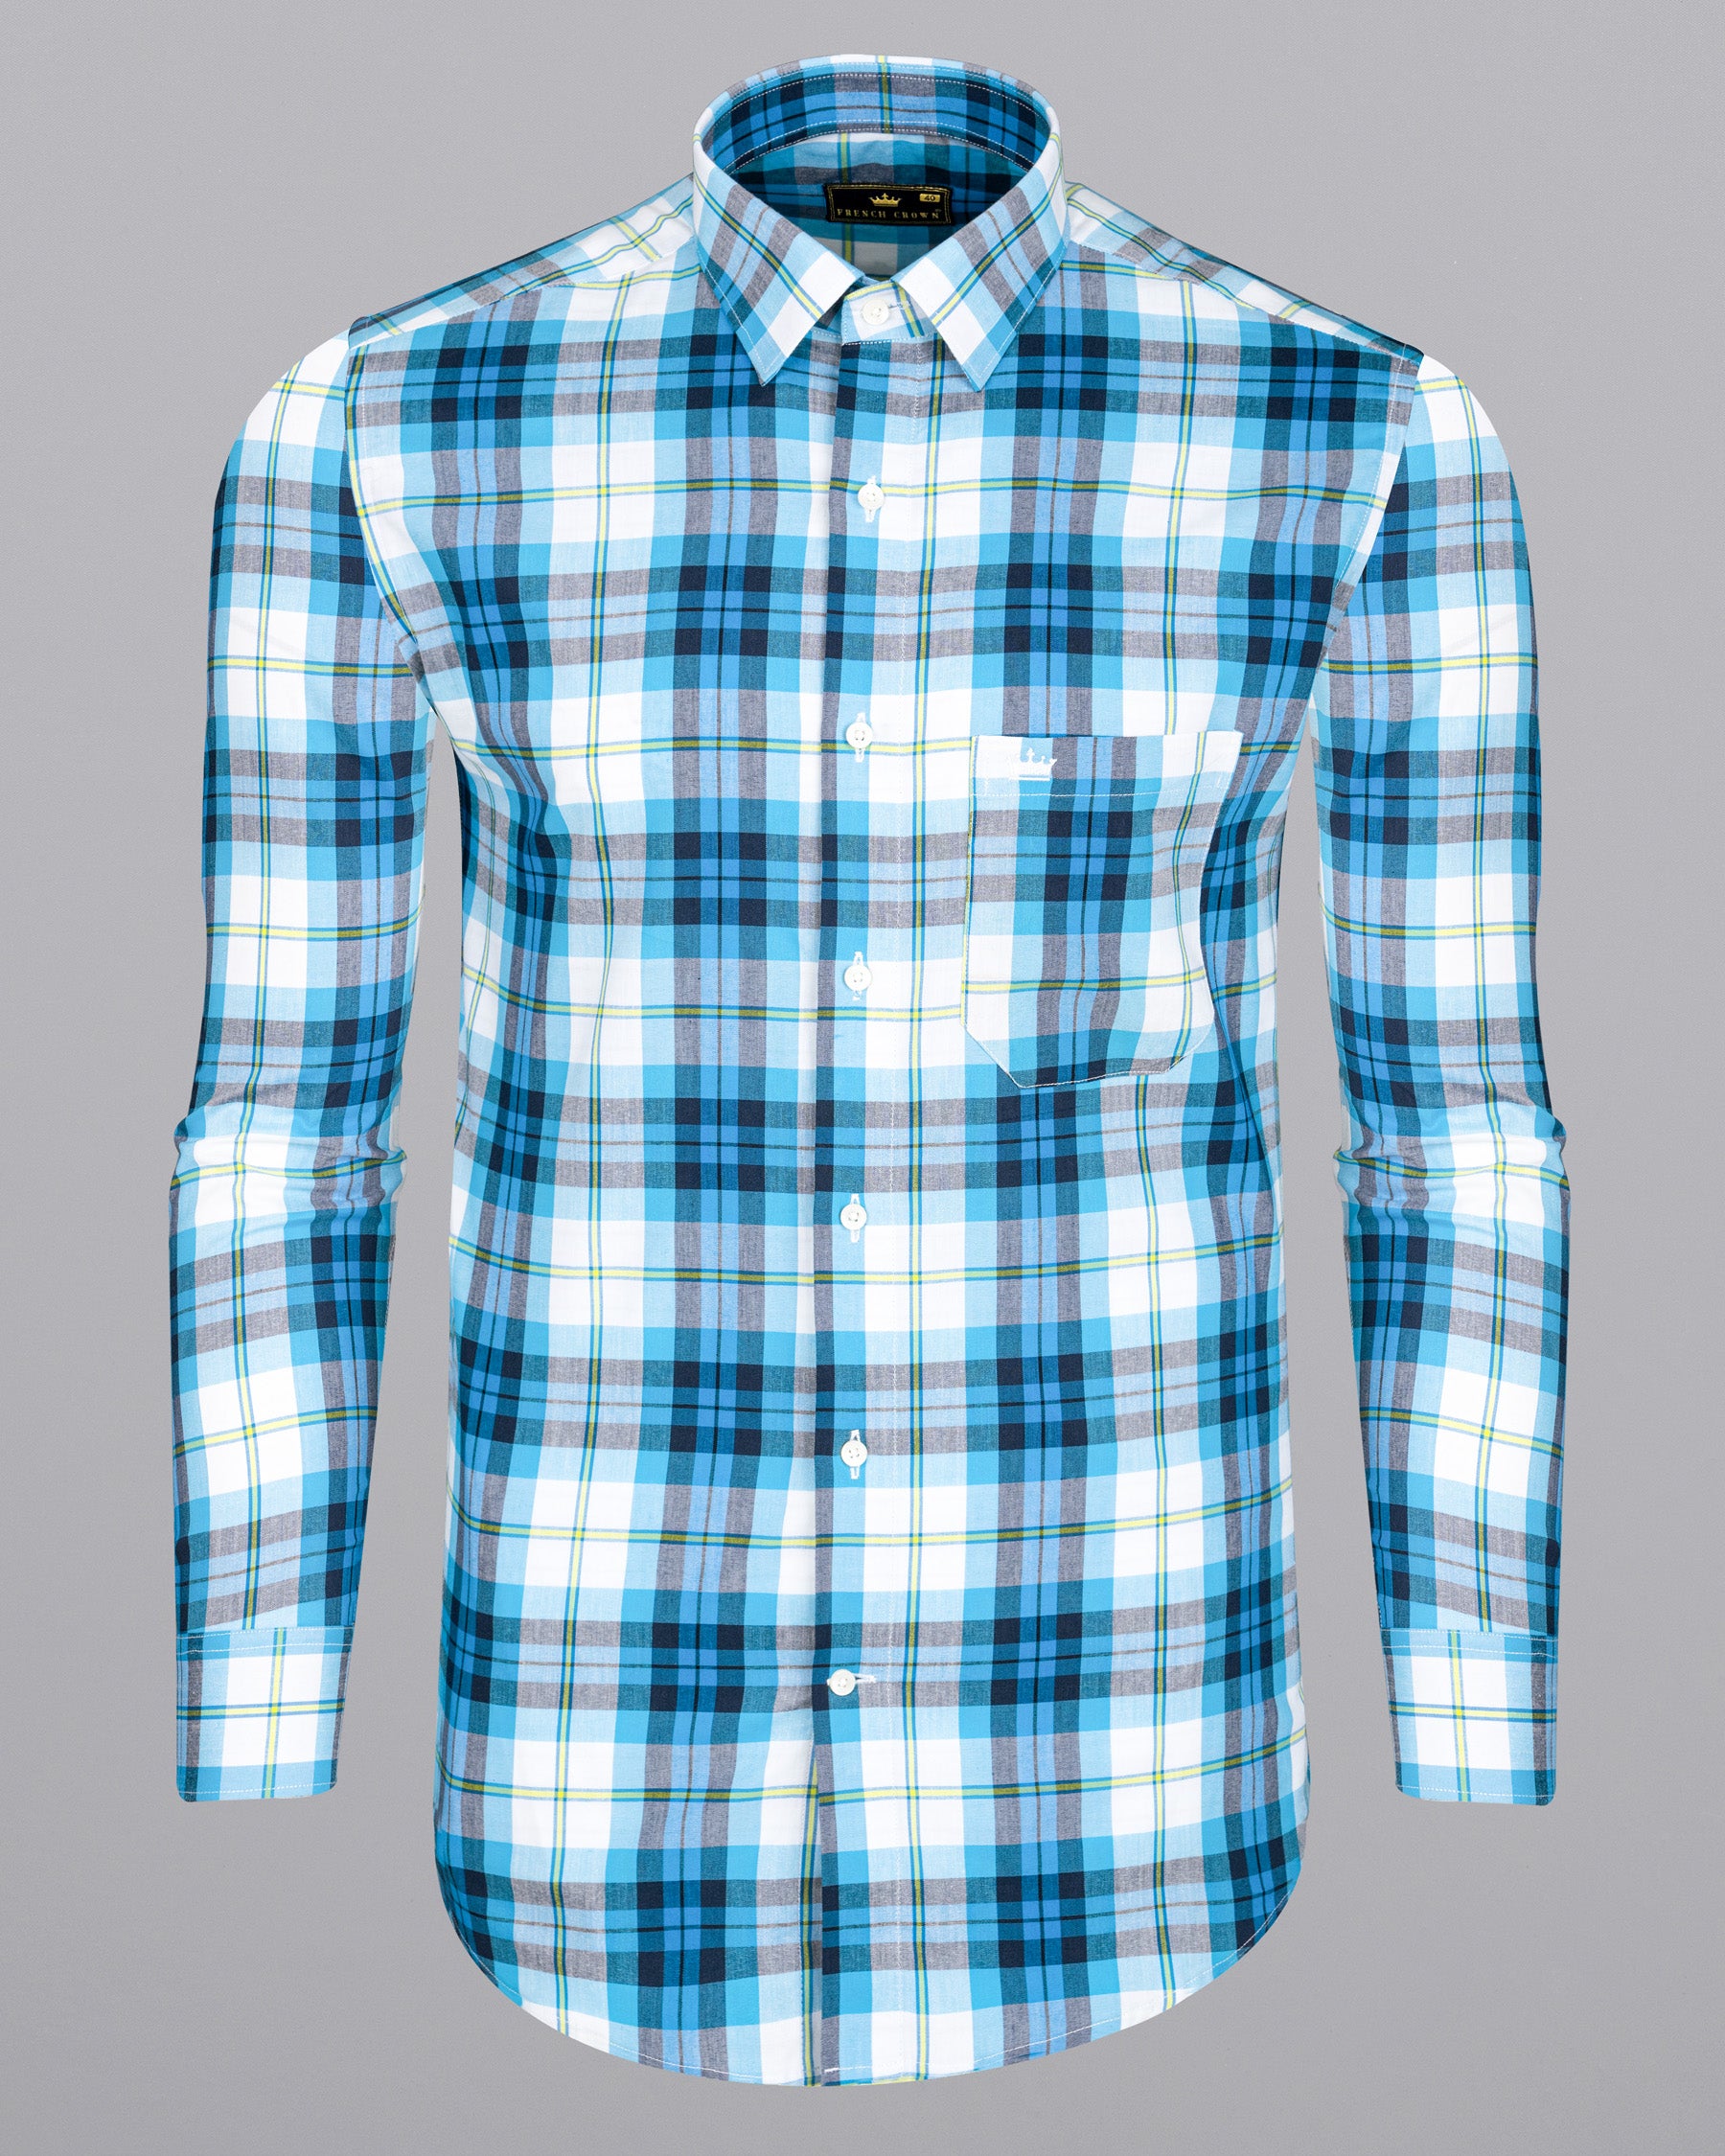 Anakiwa Blue and White Plaid Premium Twill Textured Premium Cotton Shirt 6707-38,6707-38,6707-39,6707-39,6707-40,6707-40,6707-42,6707-42,6707-44,6707-44,6707-46,6707-46,6707-48,6707-48,6707-50,6707-50,6707-52,6707-52